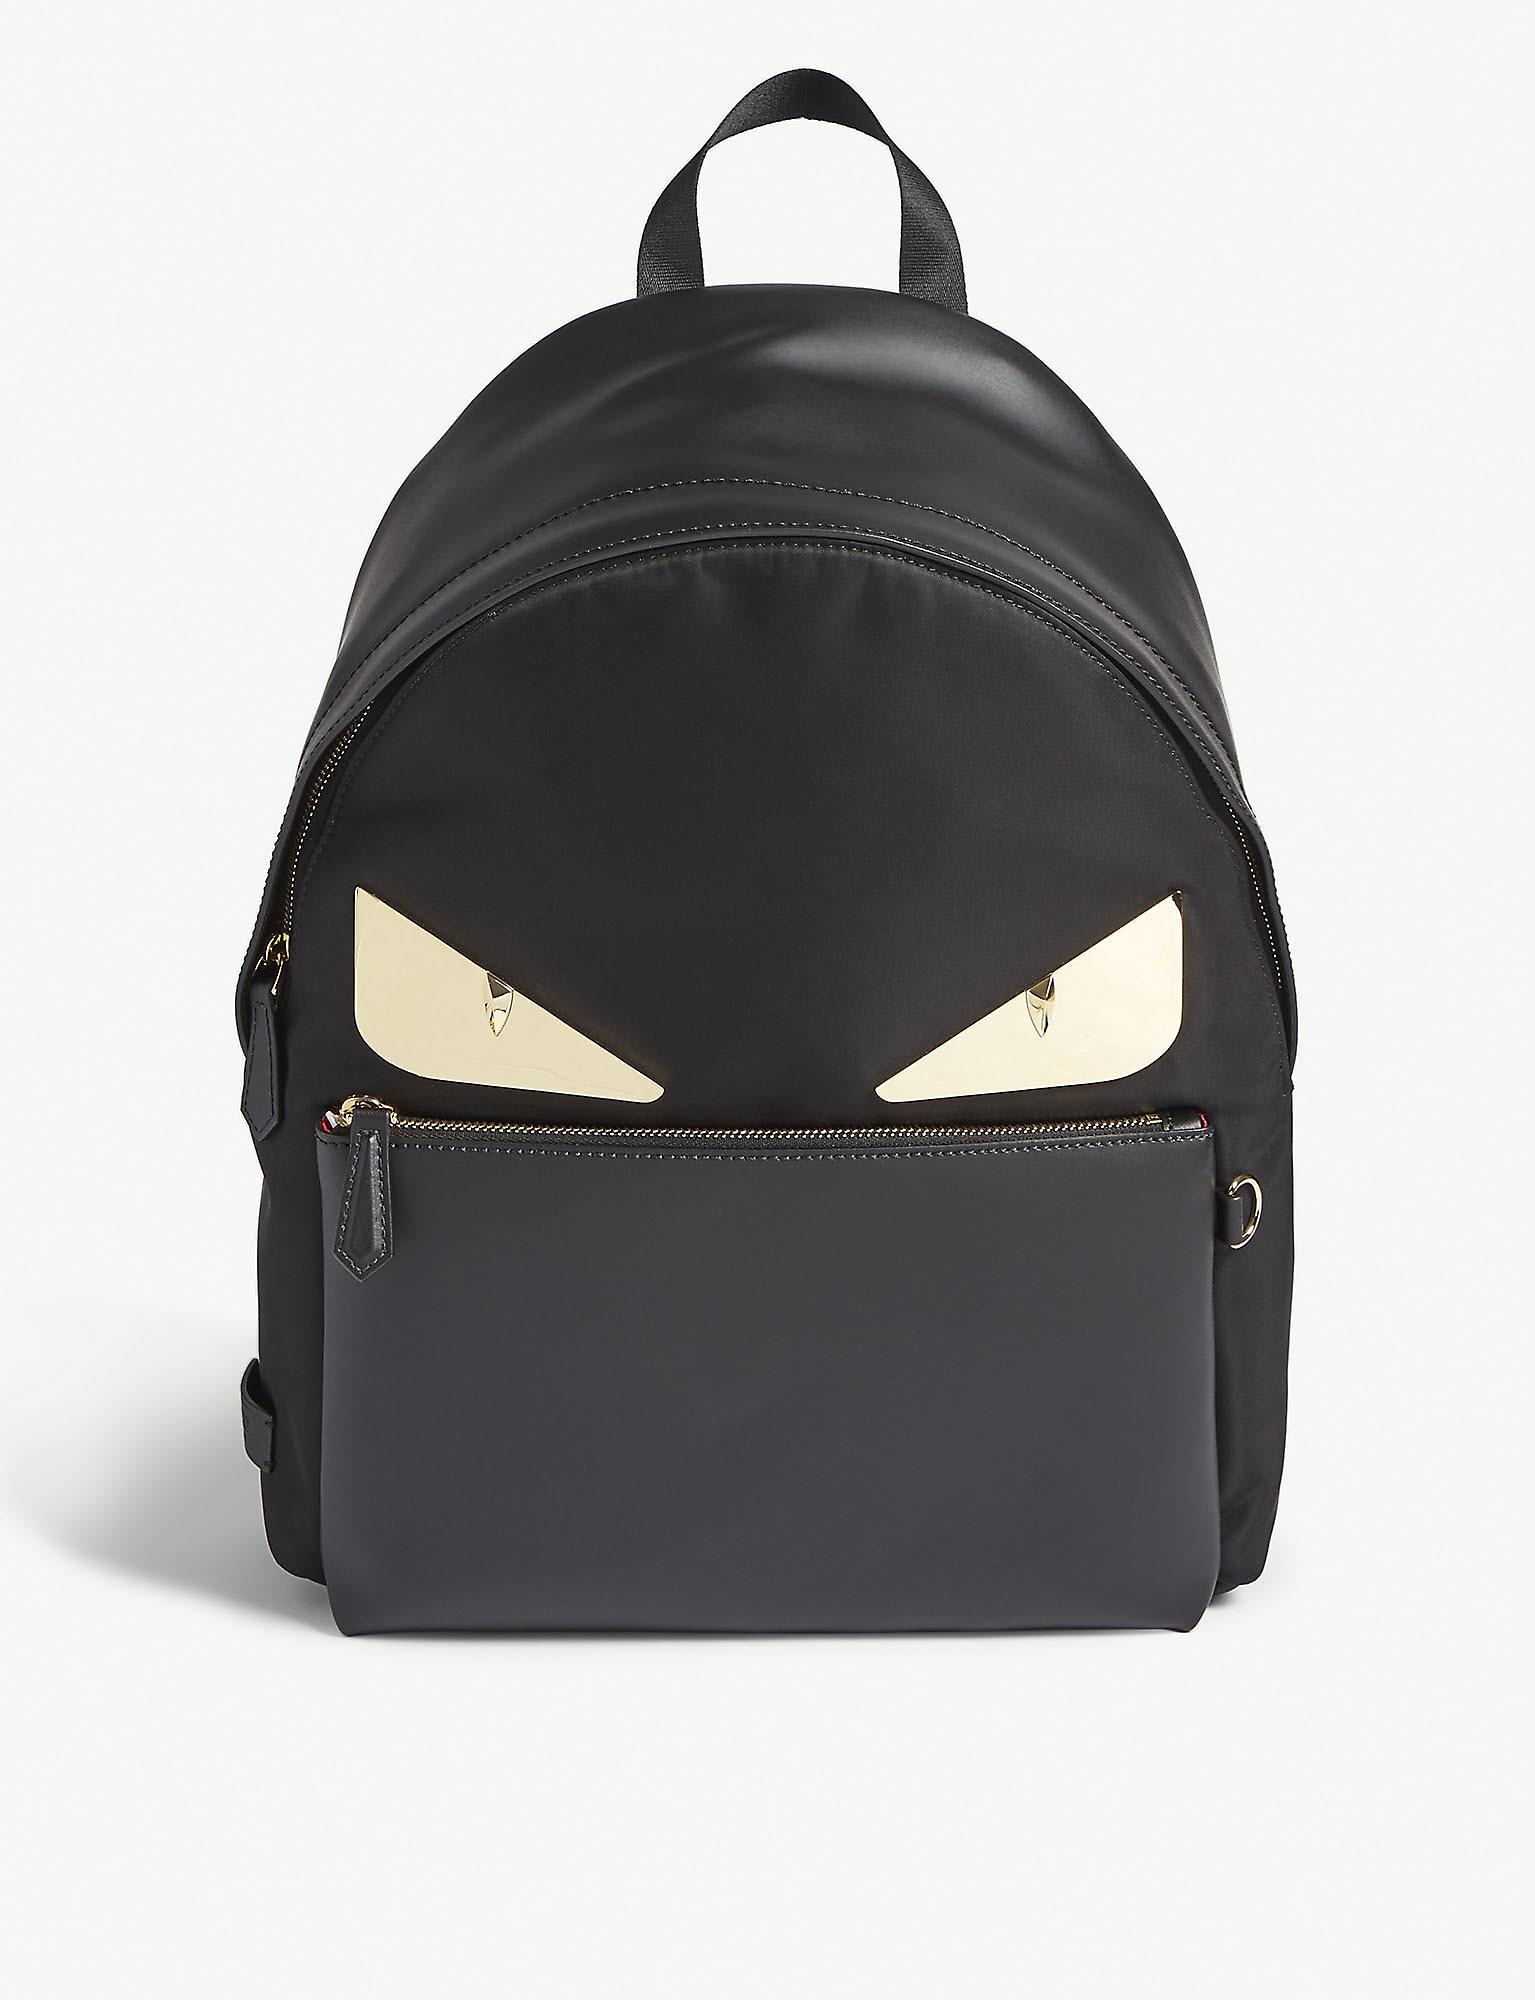 Fendi Bag Bugs Leather-trimmed Nylon Backpack in Black for Men - Lyst